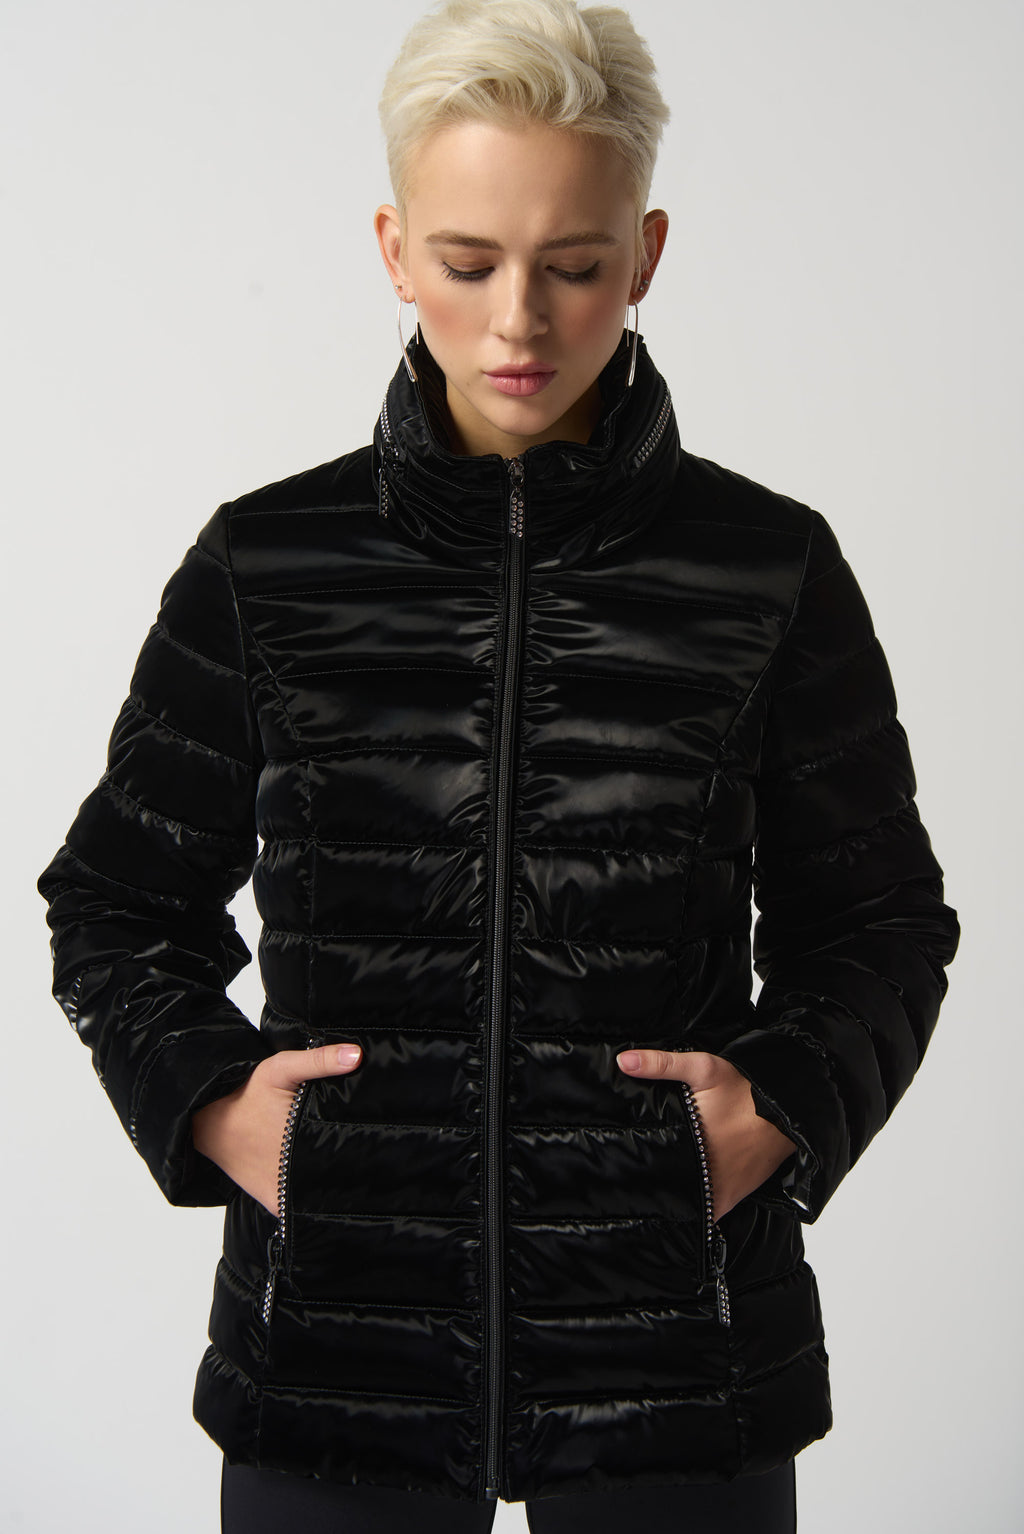 Joseph Ribkoff Black Metallic Puffer Jacket Style 233967